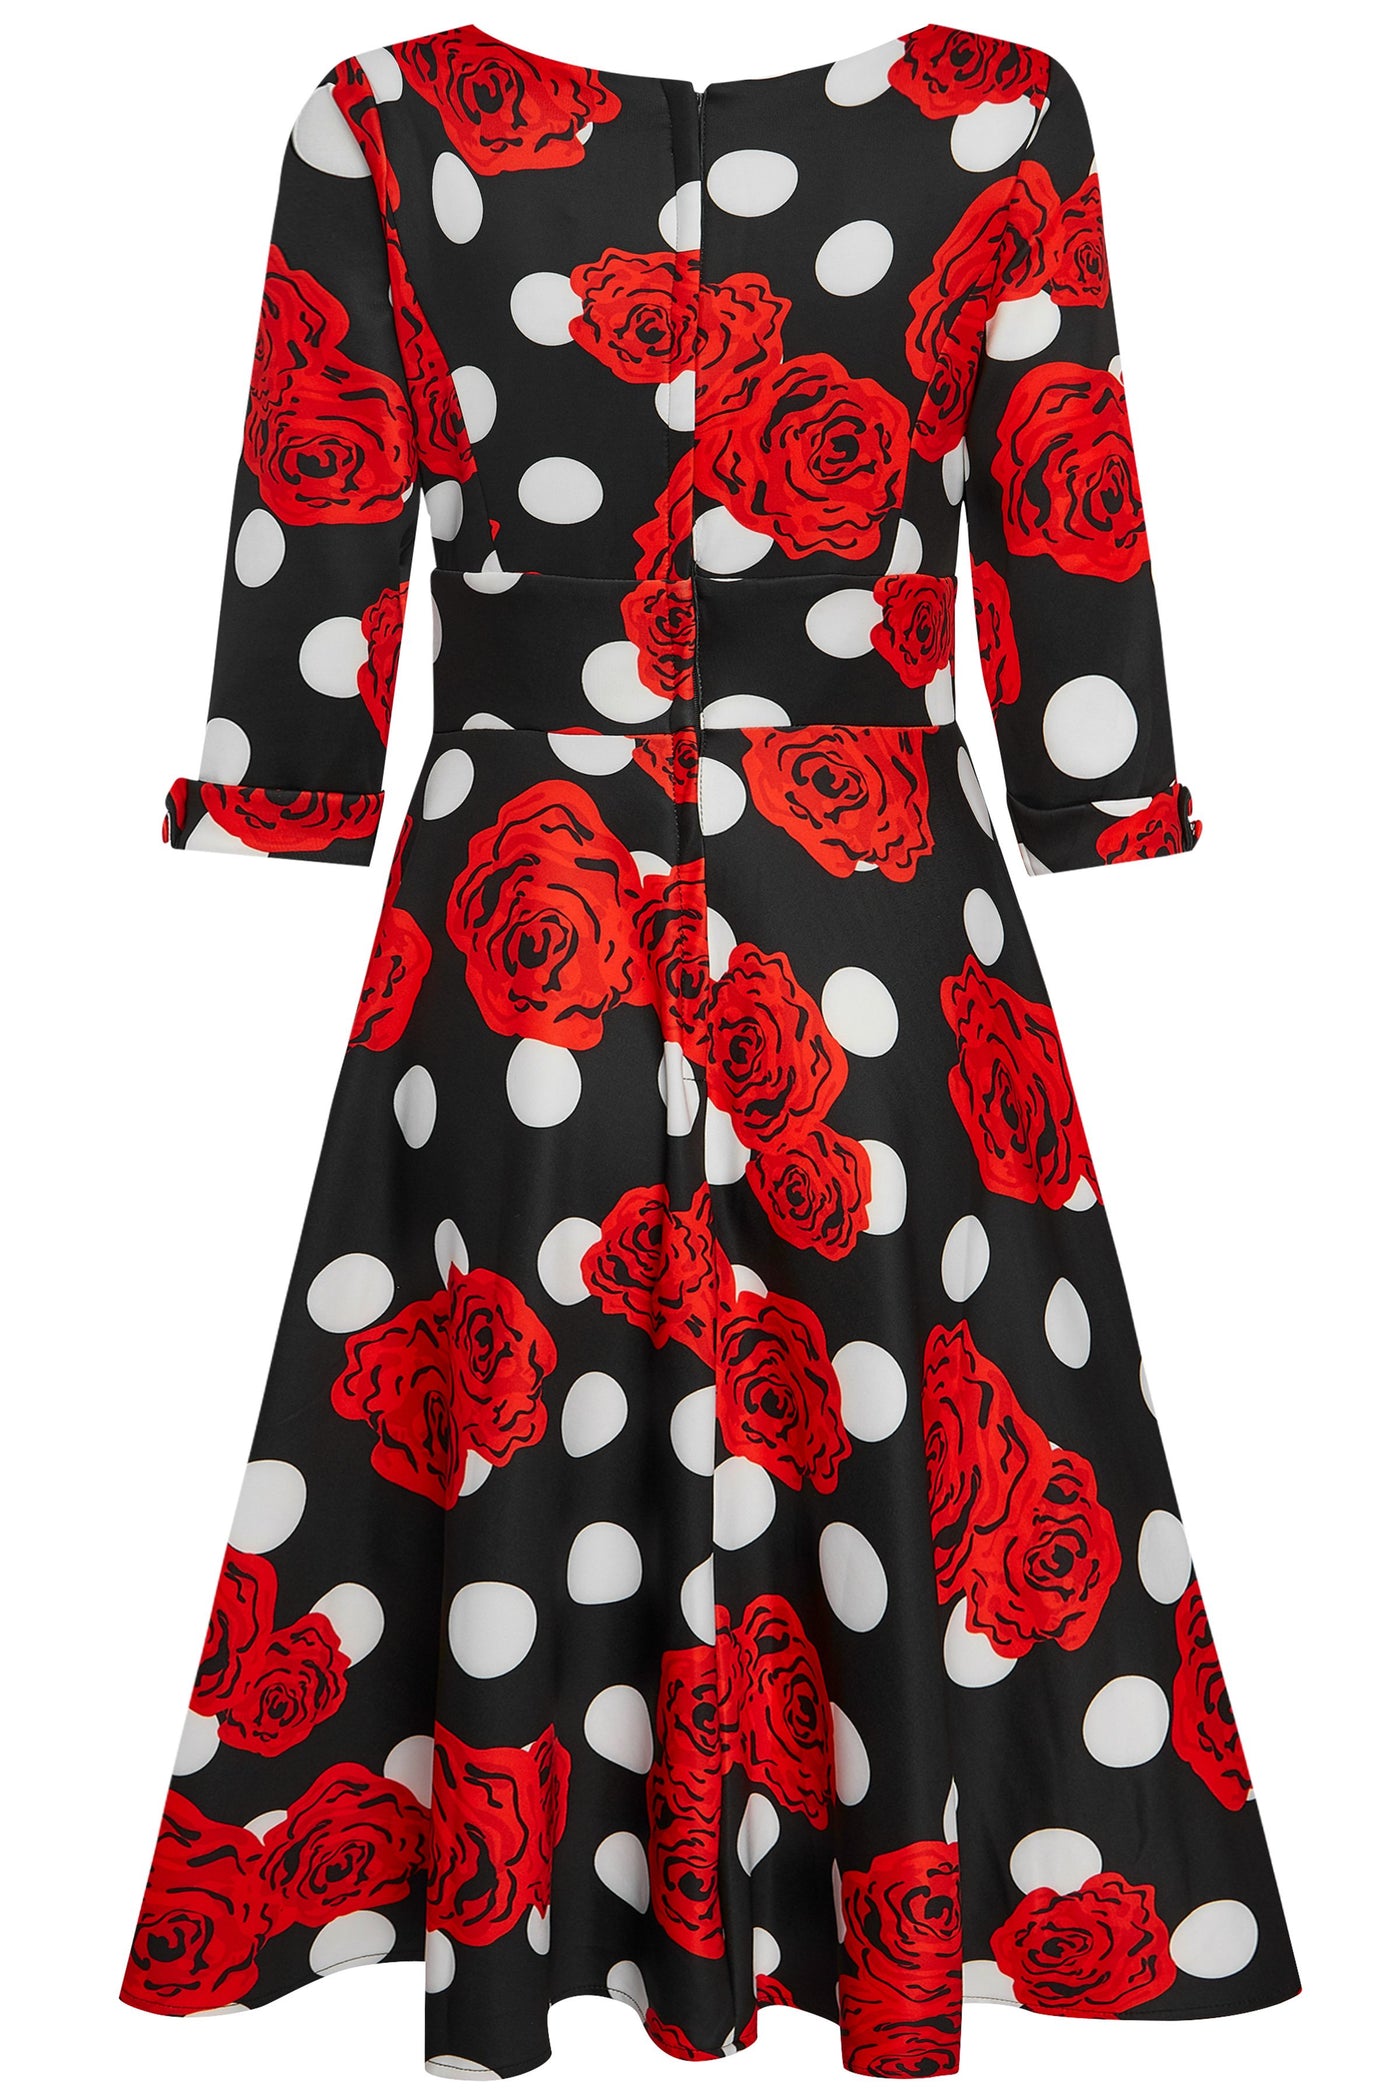 Scarlette Long-Sleeved Stretchy Dress Rose & White Polka Dots in Black